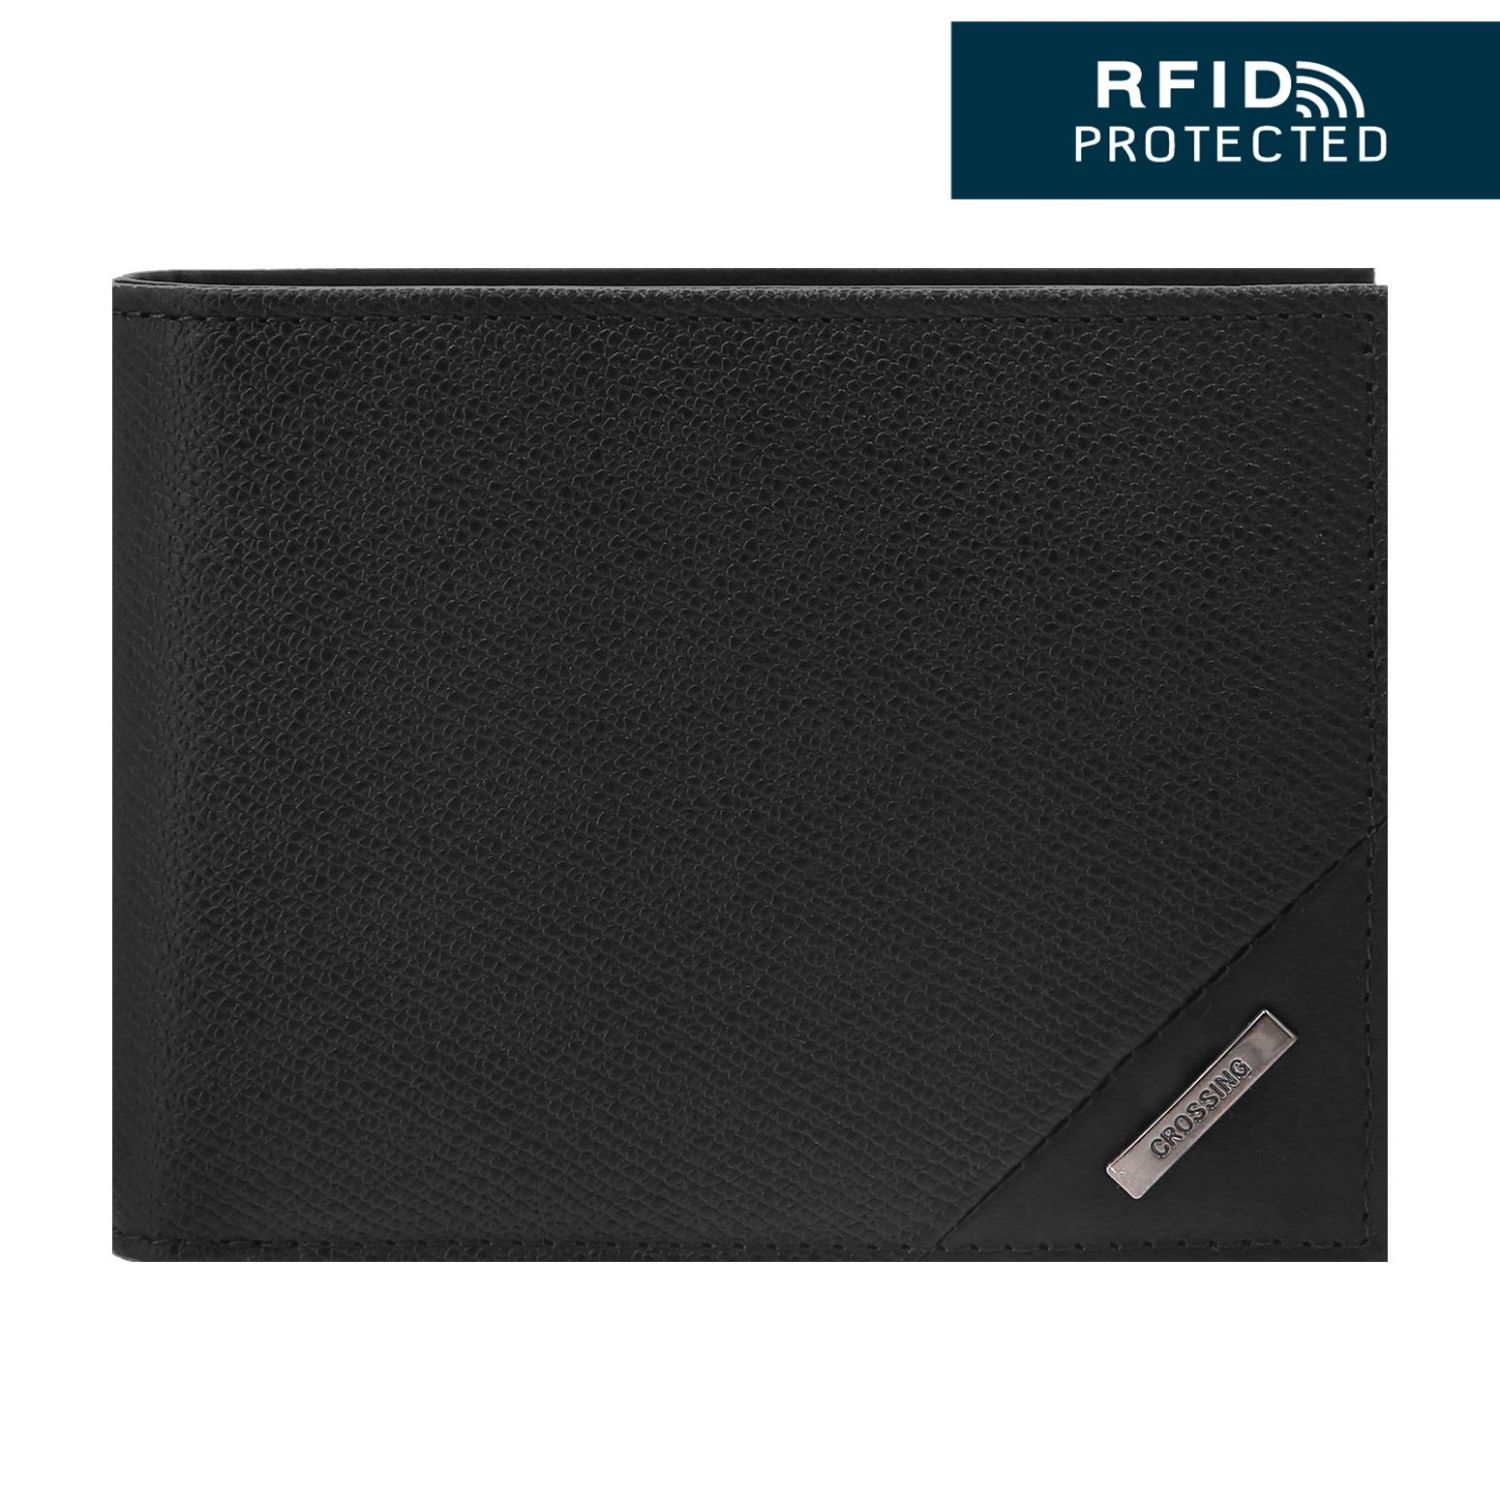 Crossing-Riforma-Slim-Leather-Wallet-With-Coin-Pocket-5-Card-Slots-RFID-Black-1-1.jpg